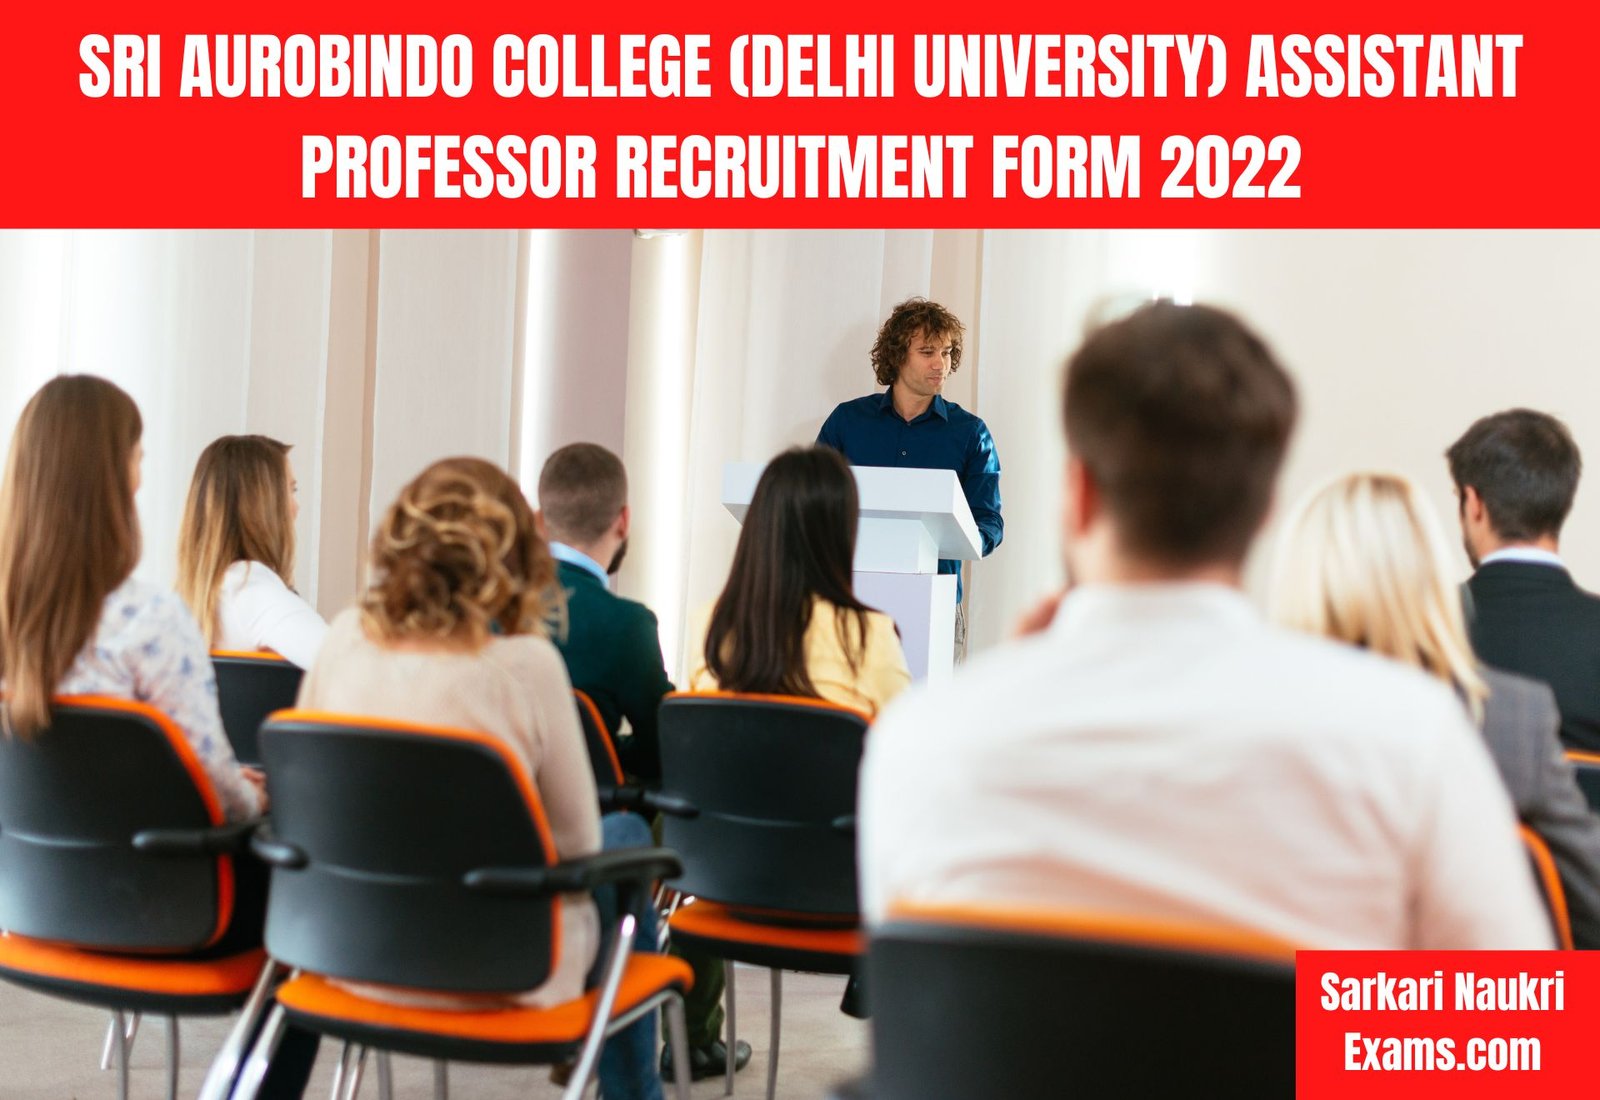 Sri Aurobindo College (Delhi University) Assistant Professor Recruitment Form 2022